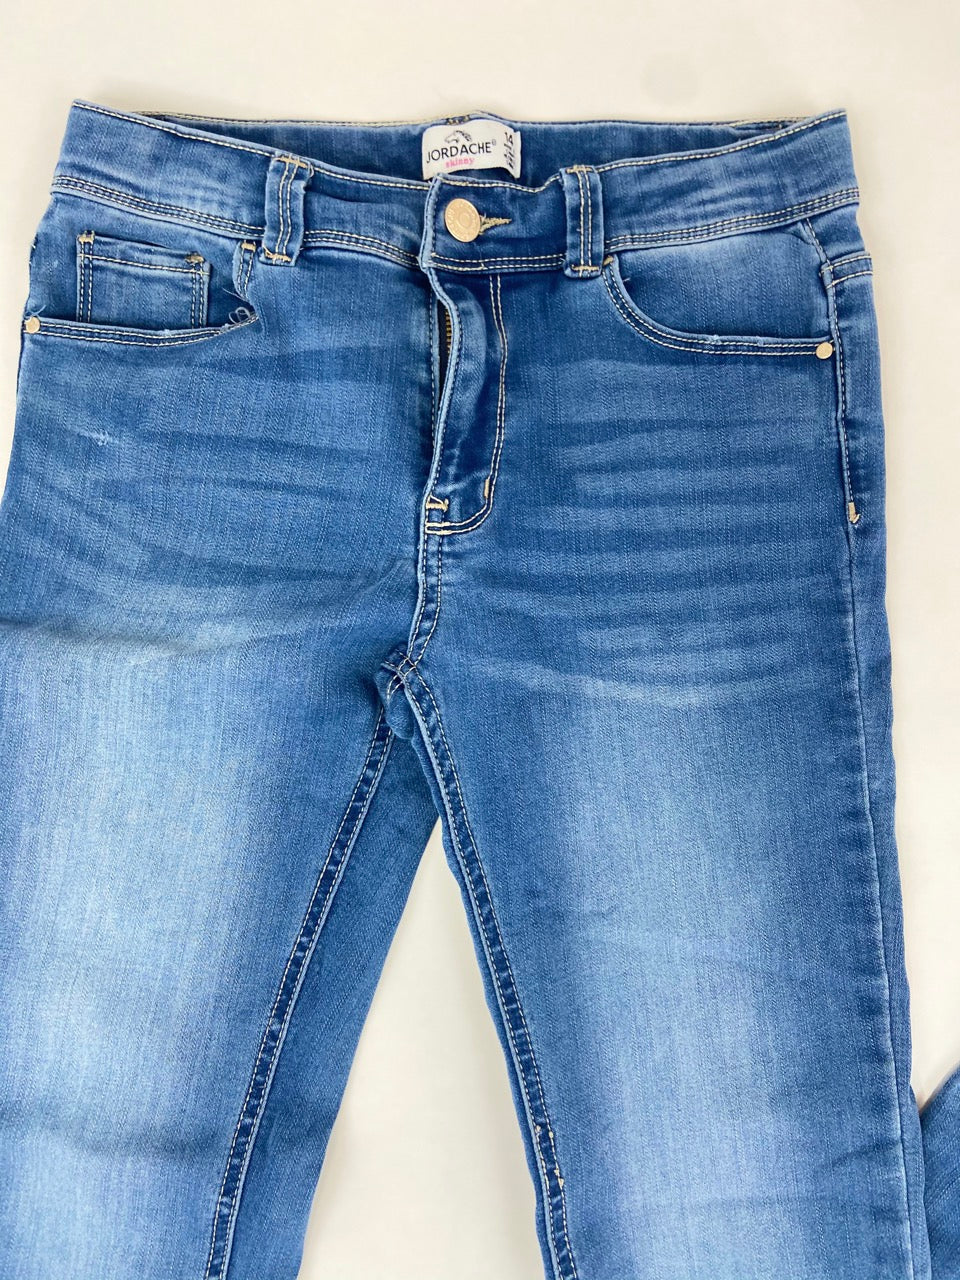 Mediam Wash Skinny Jeans- Youth L (14)